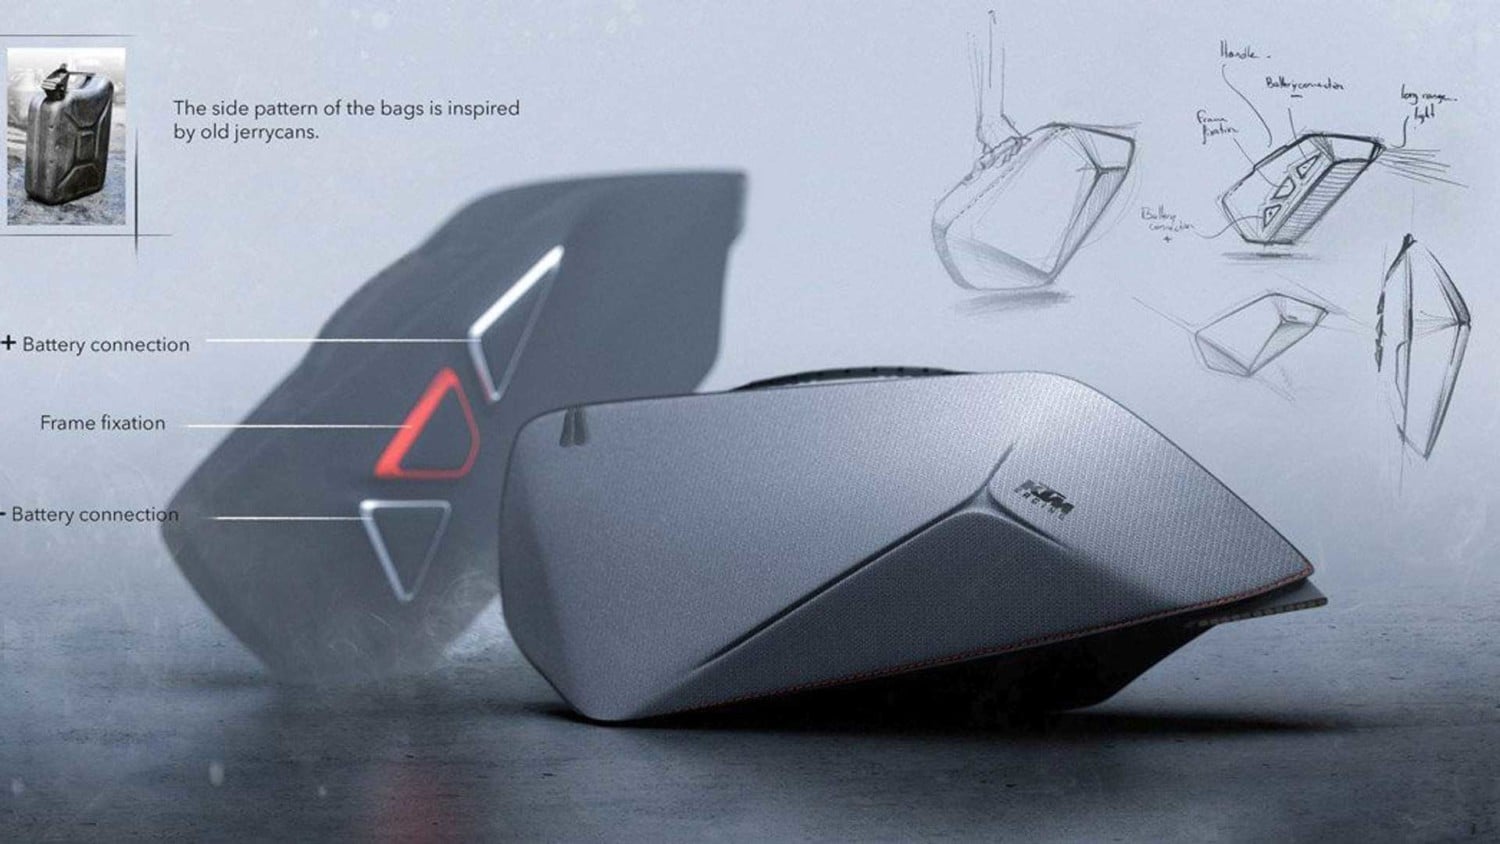 Futuristisk KTM Freeride koncept